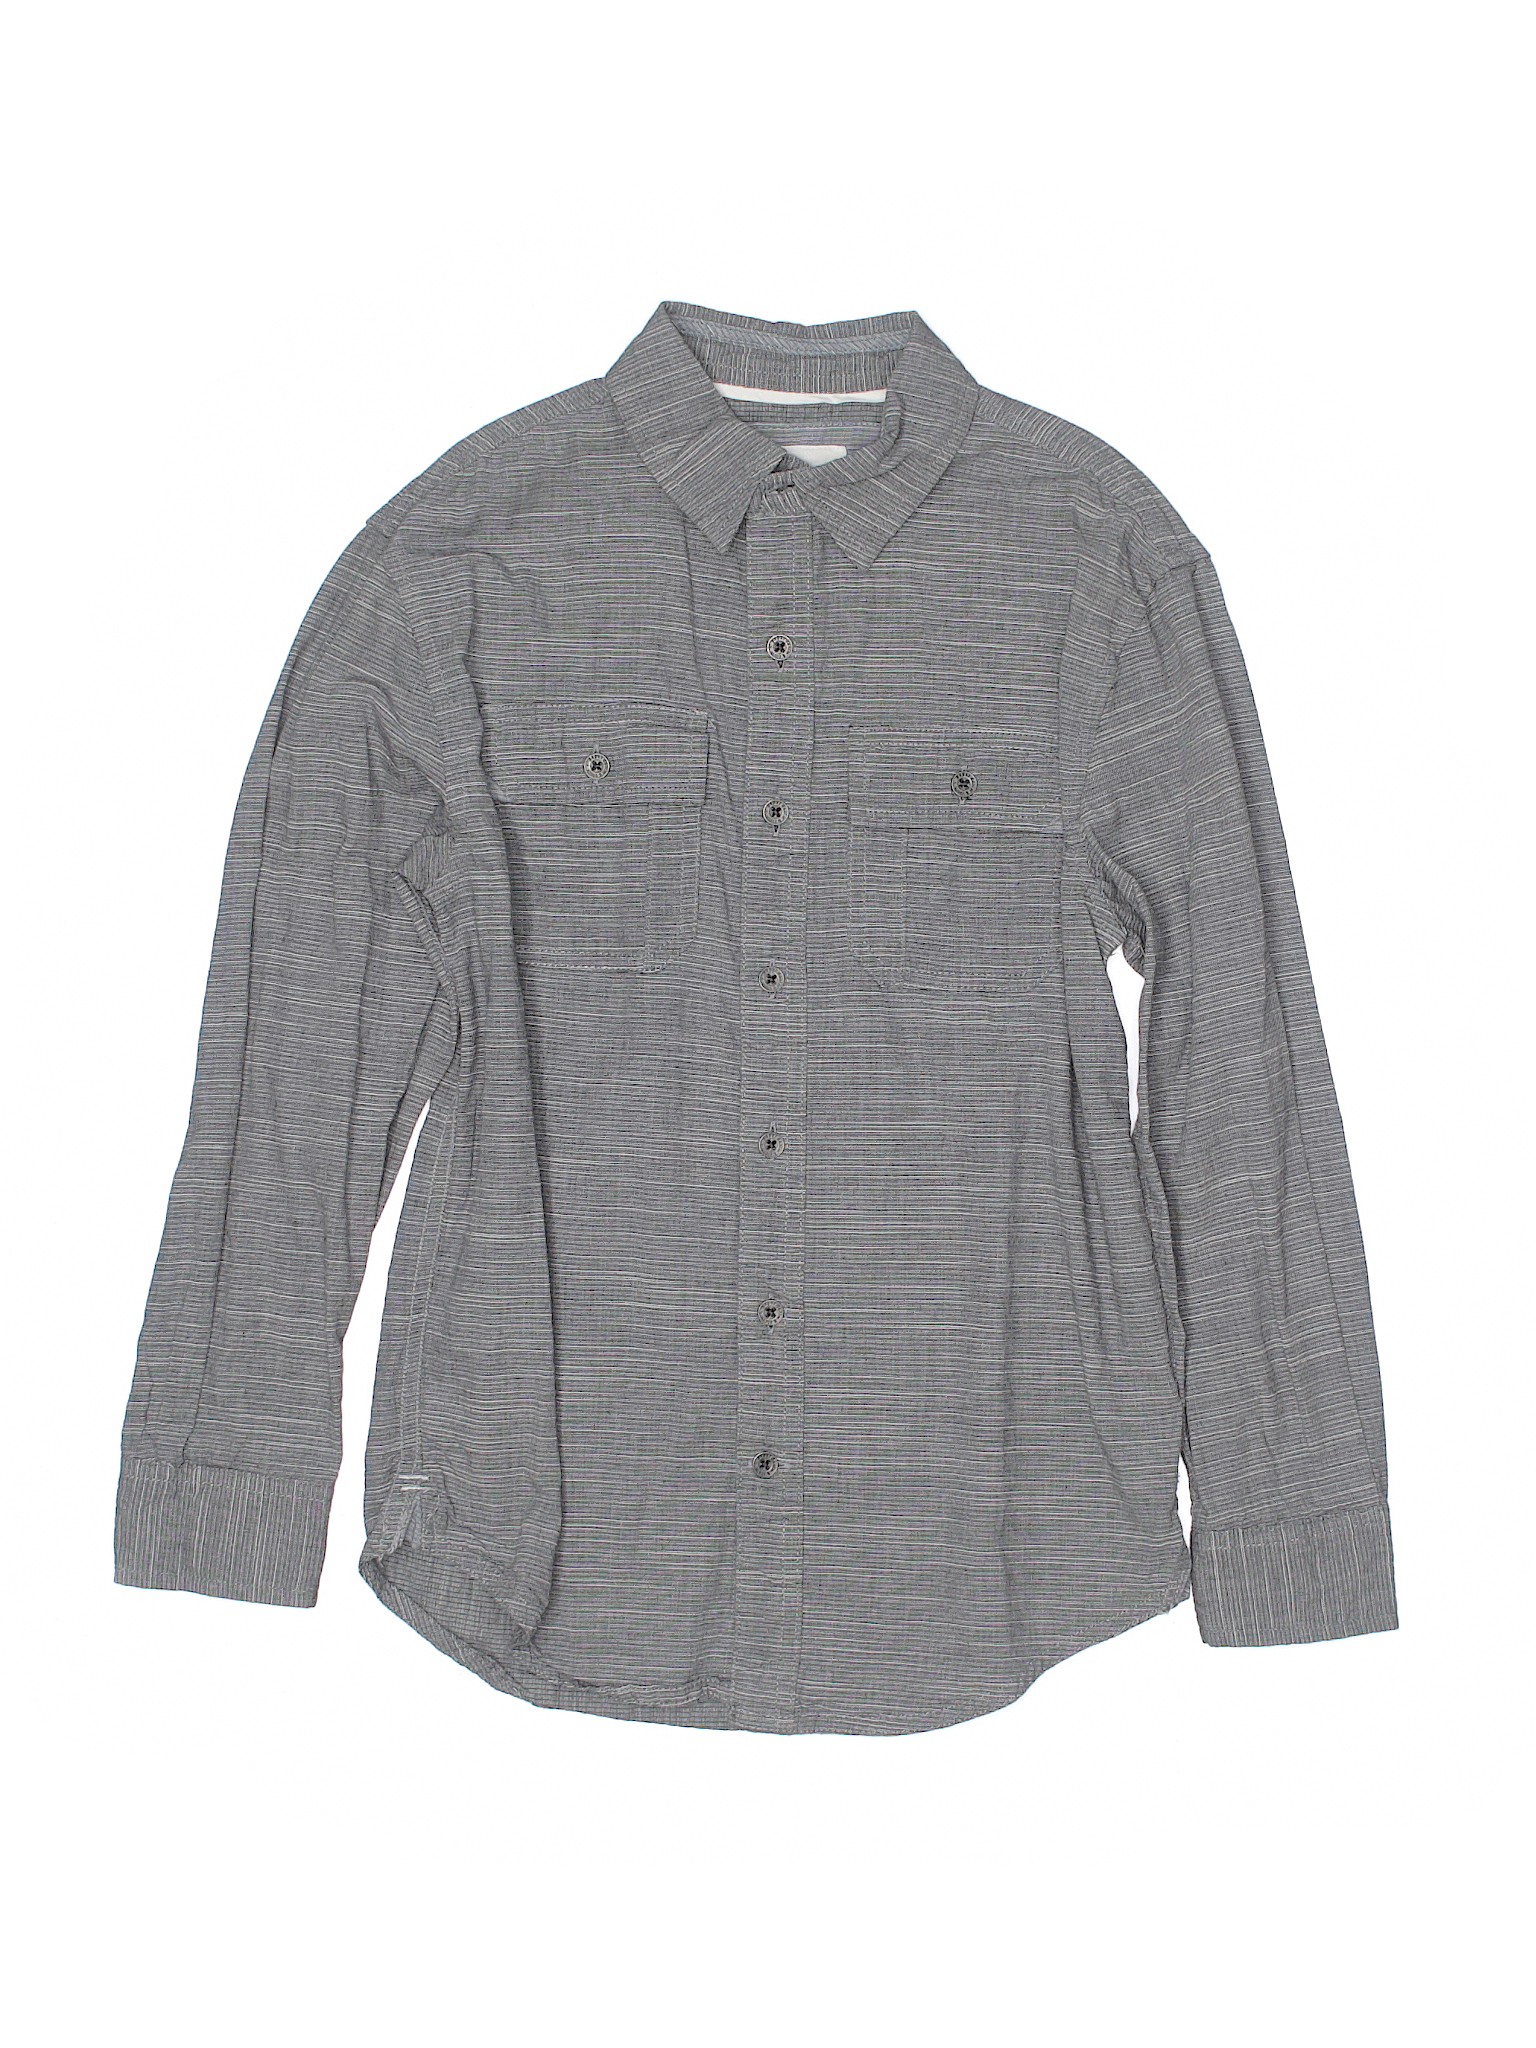 Paper Denim & Cloth 100% Cotton Plaid Gray Long Sleeve Button-Down